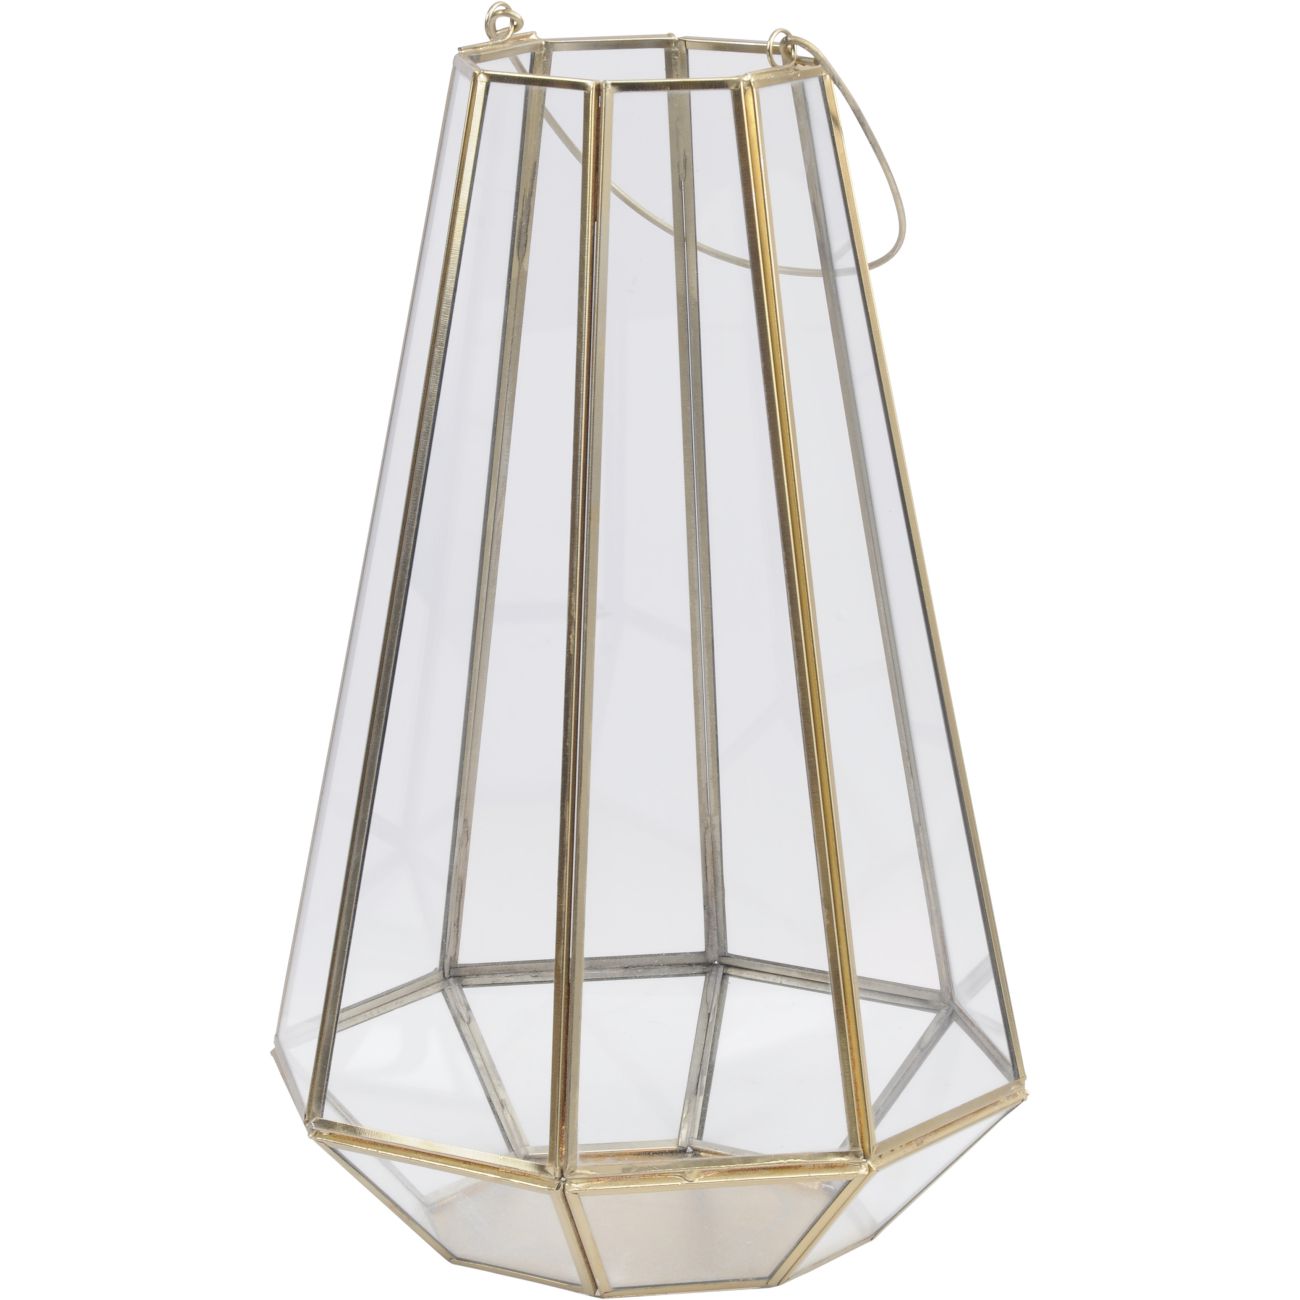 Lanterne octogonale en verre avec cadre en métal doré, grande